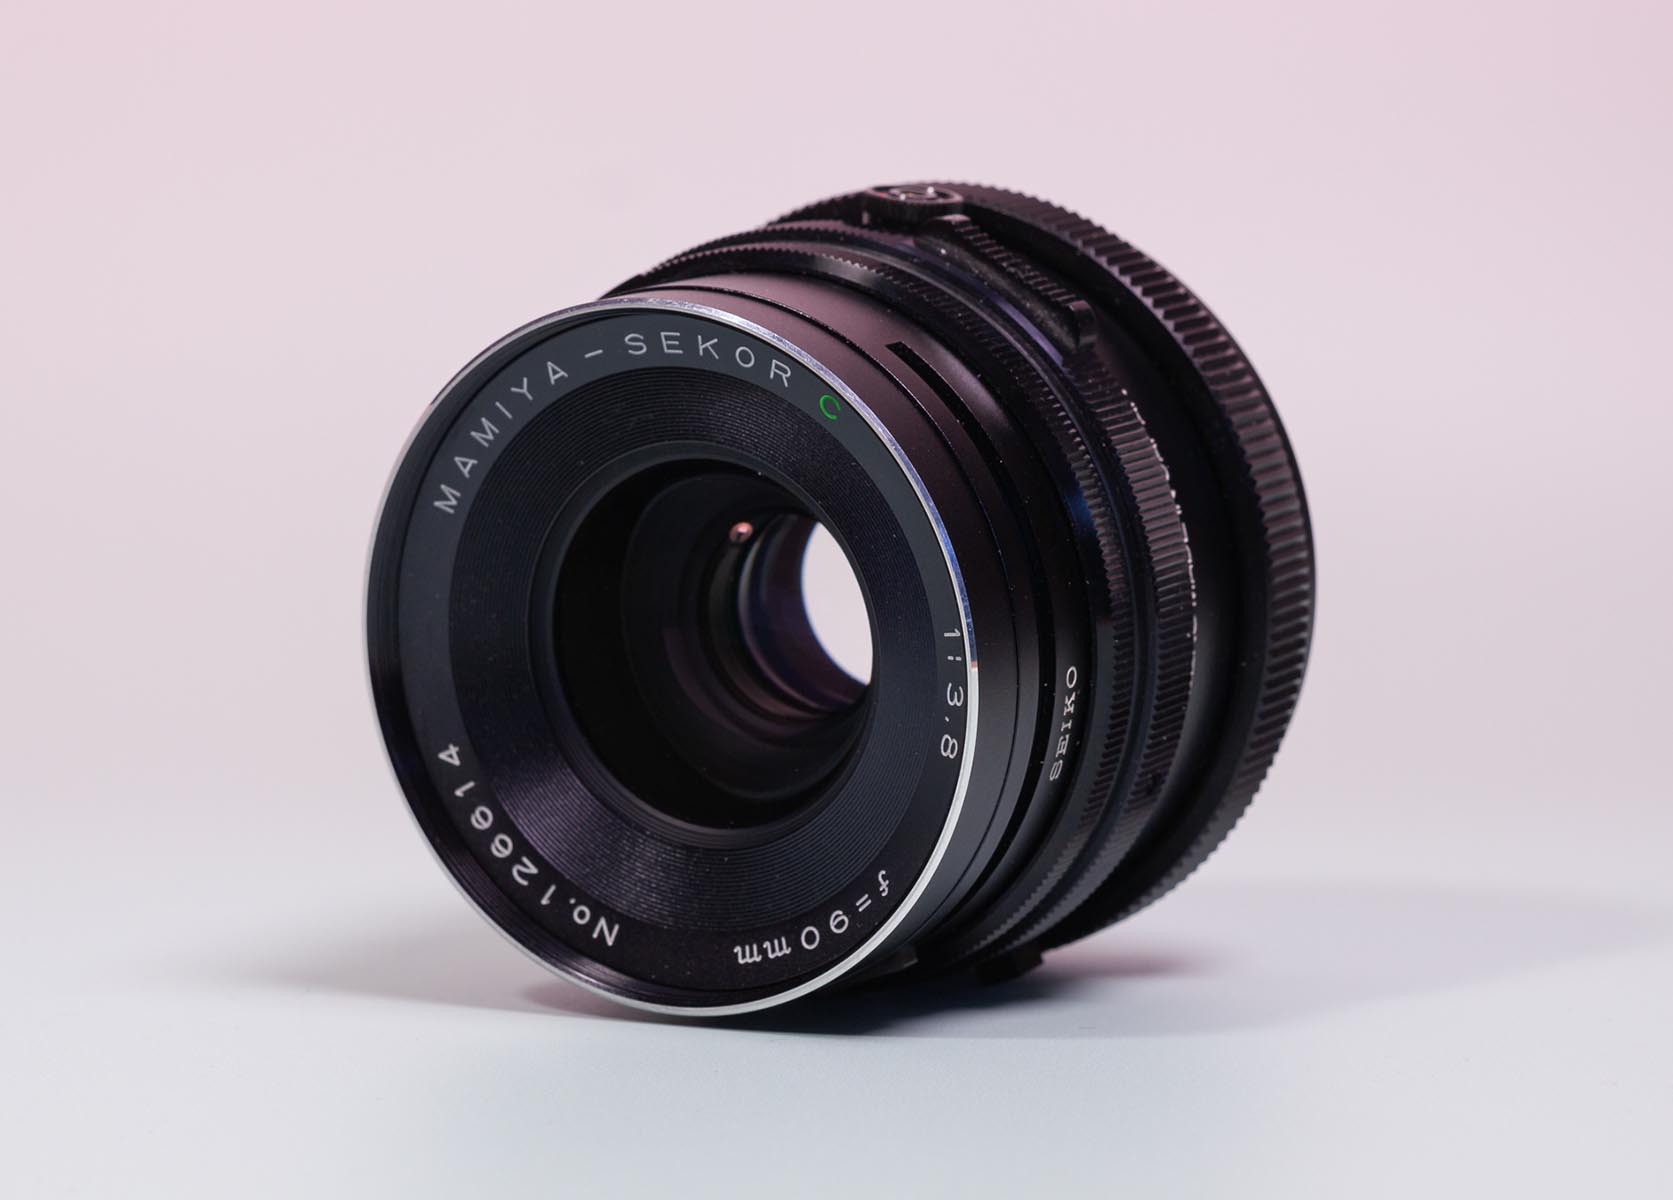 Mamiya RB67 Sekor C 90mm f3.8 lens with minimal edge separation